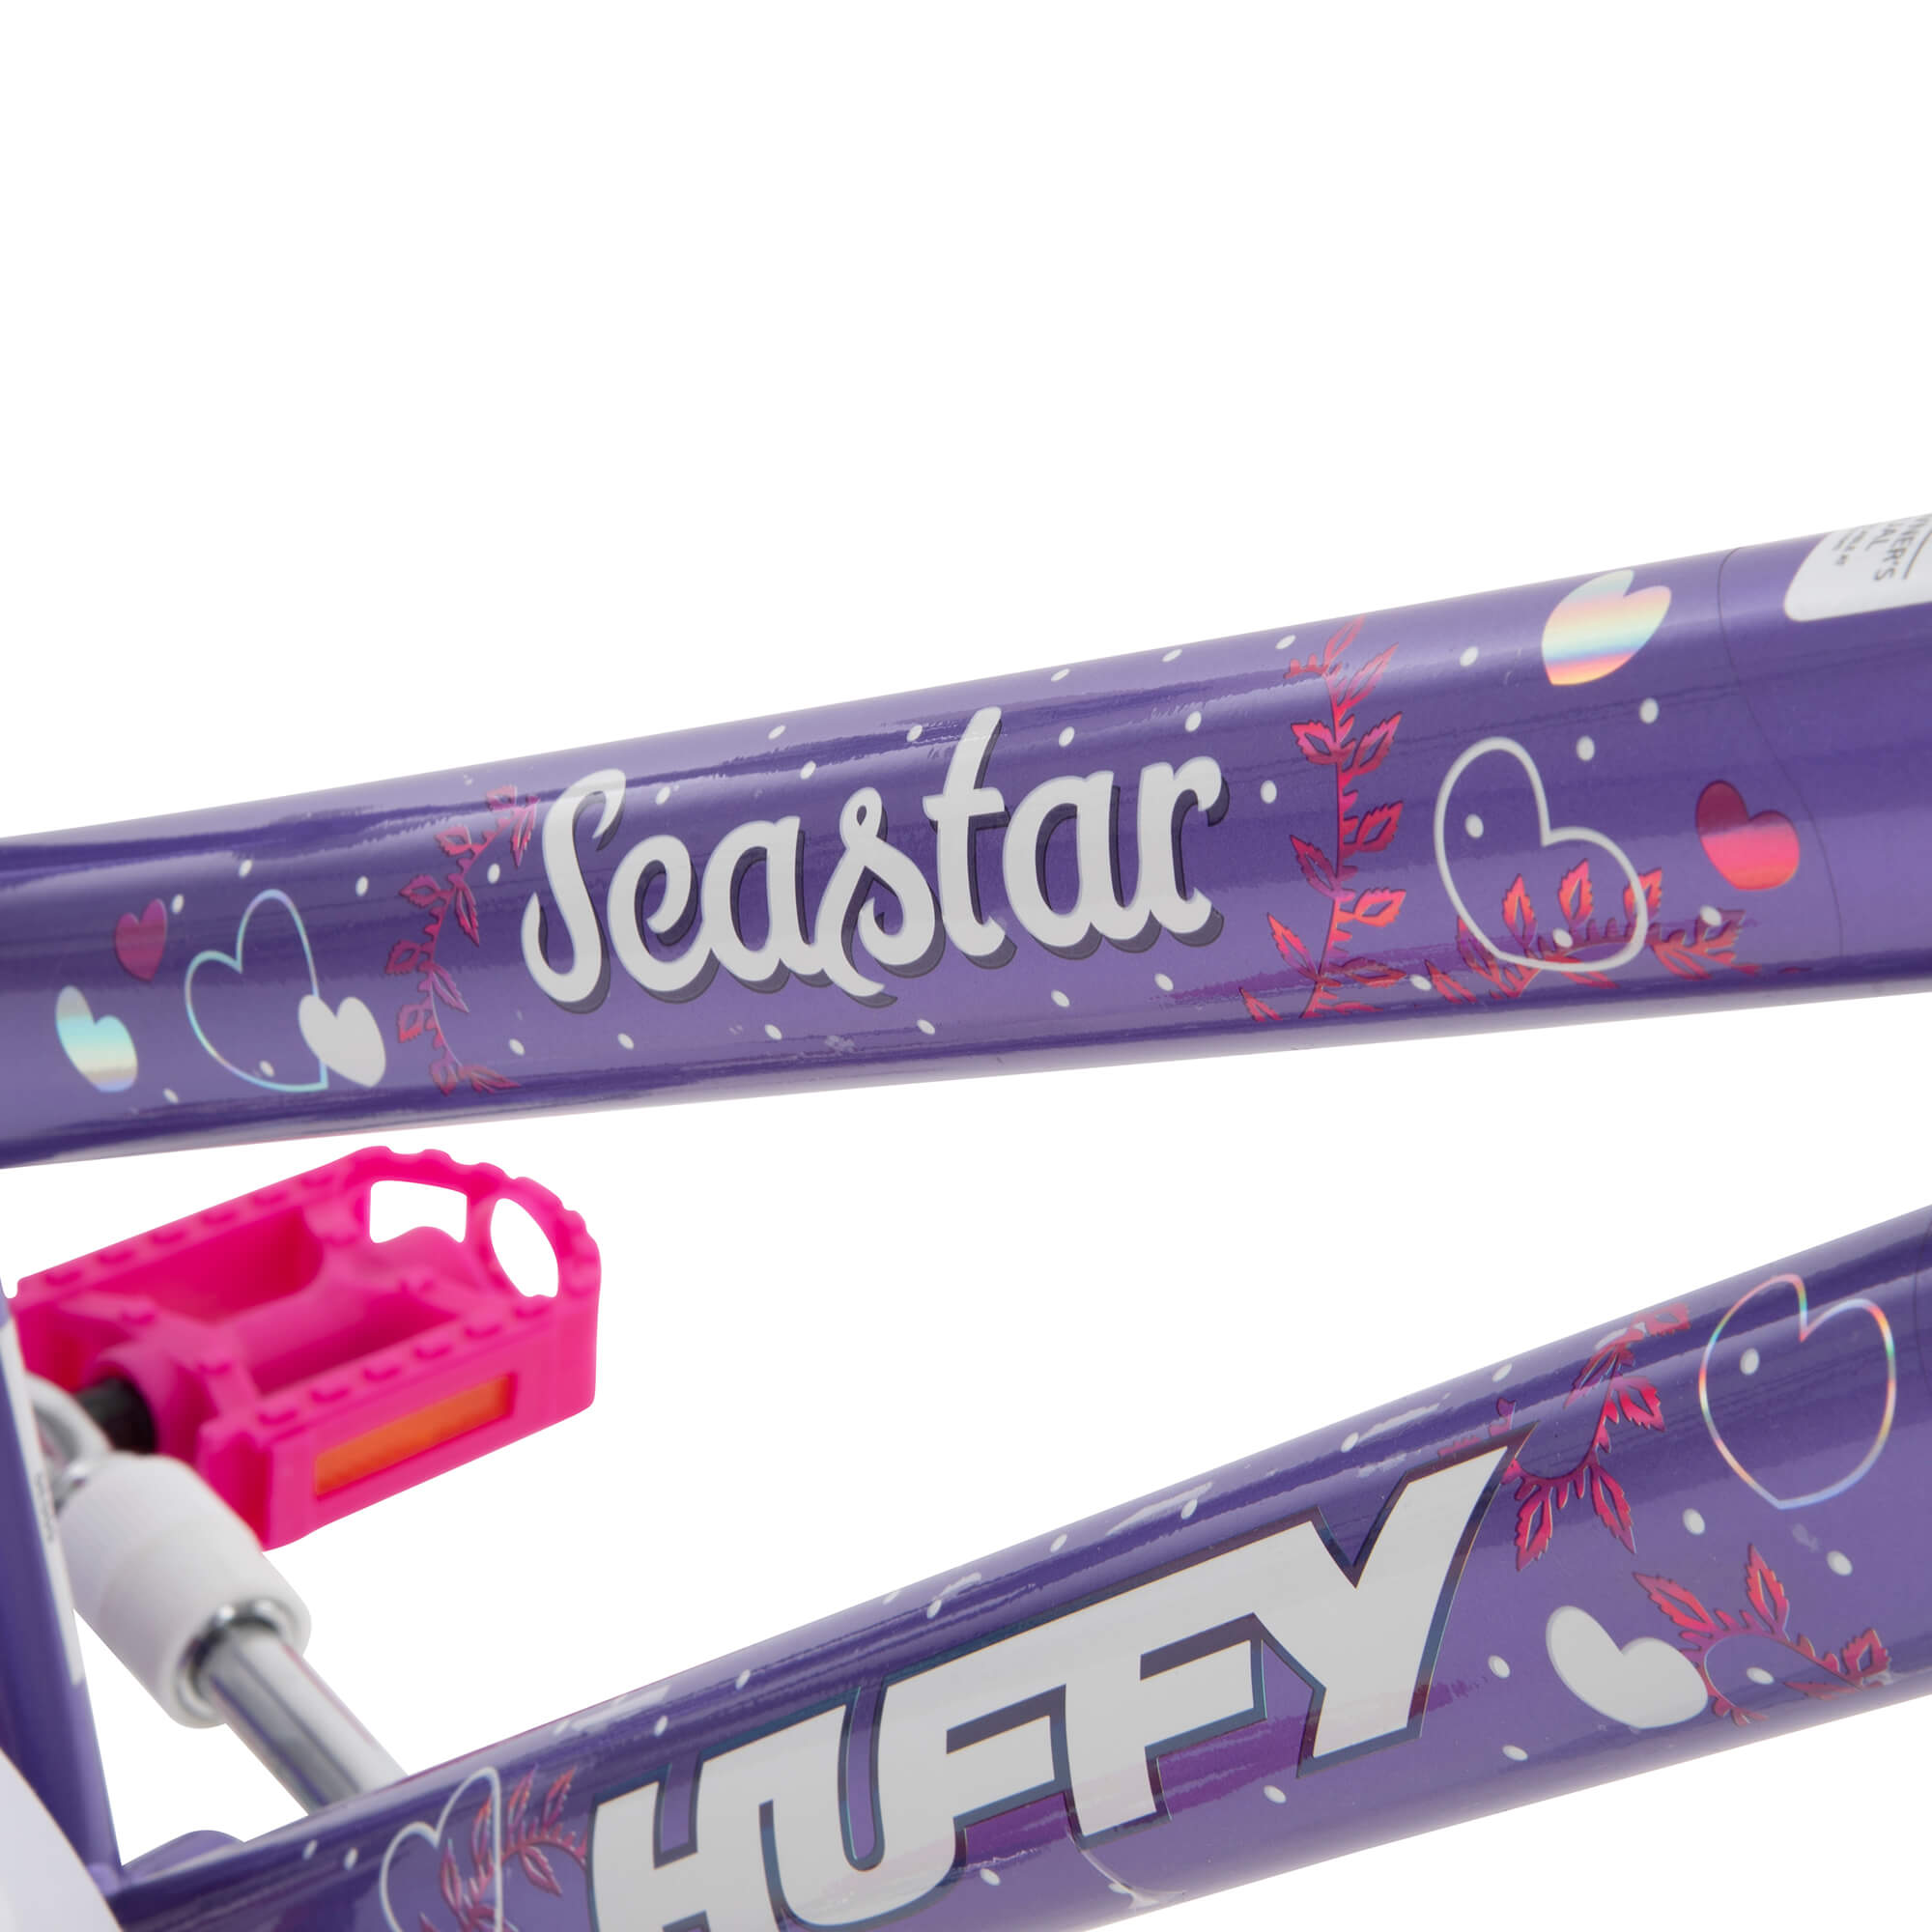 Huffy 20" Sea Star Girls Bike for Kids, Purple - image 5 of 7